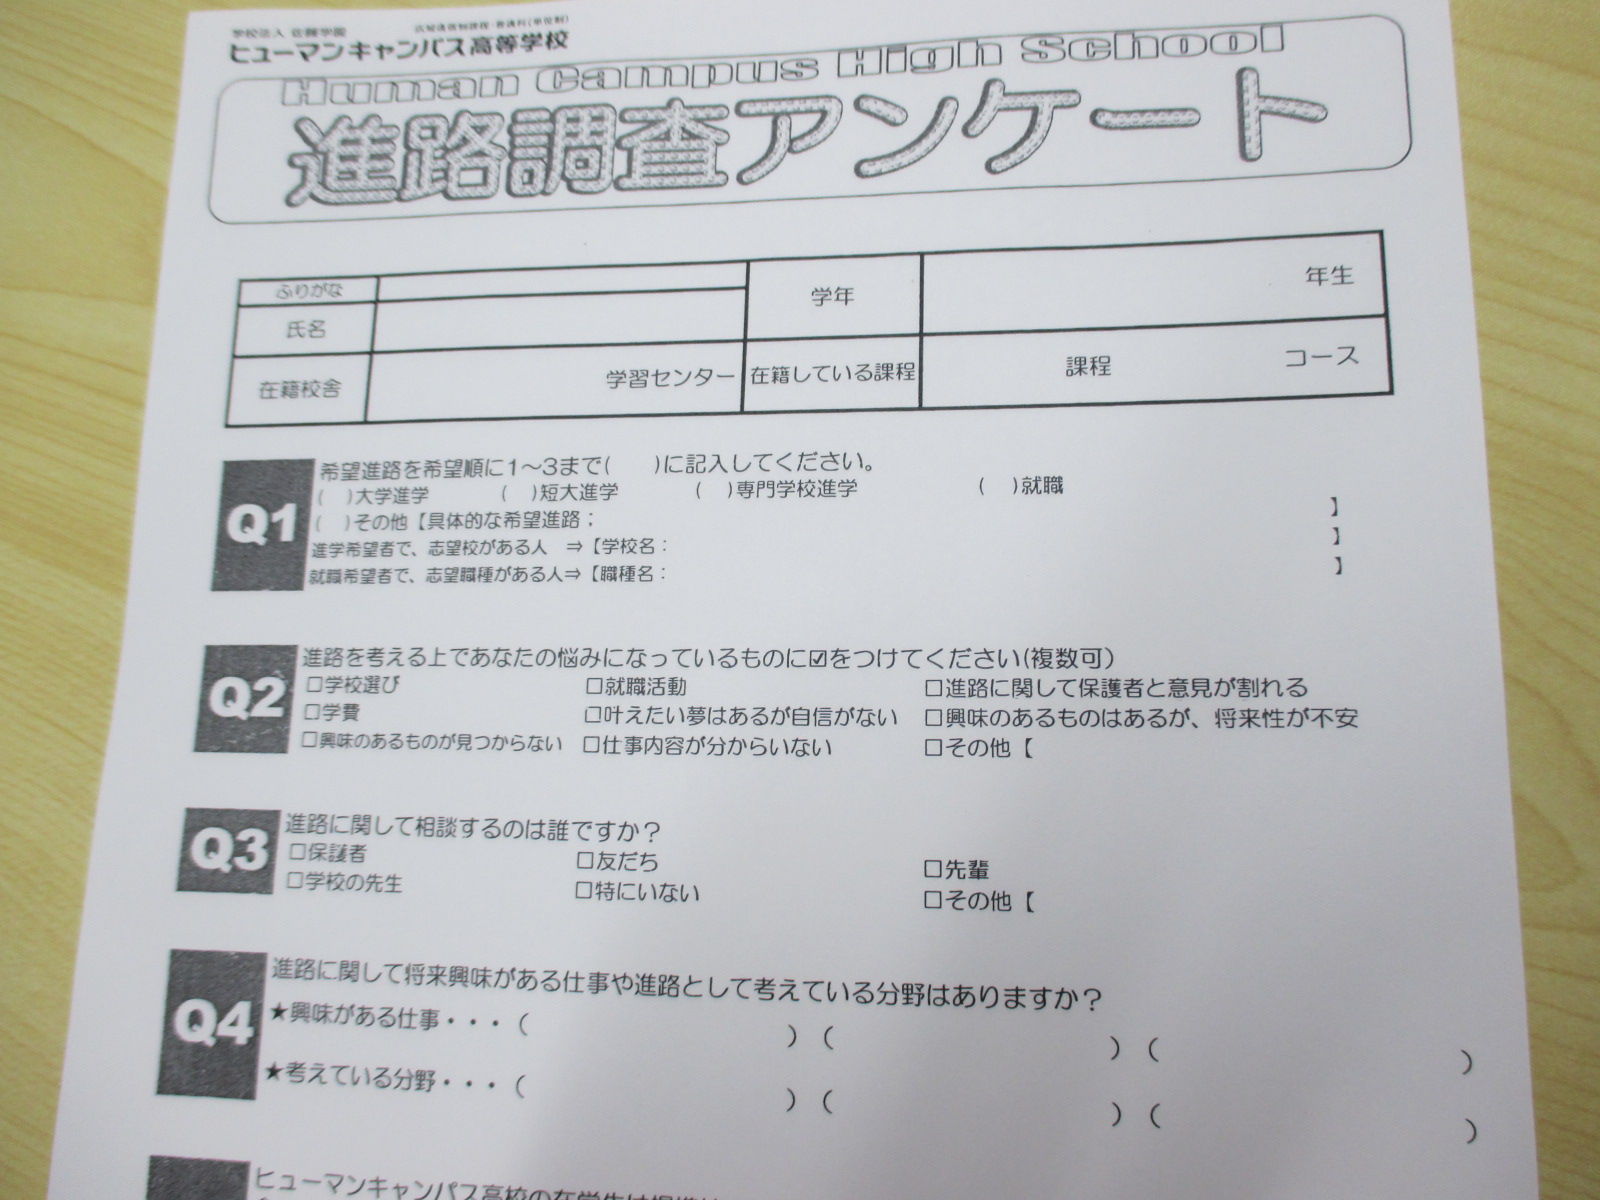 http://www.hchs.ed.jp/campus/takamatsu/images/12-15%20%E7%B7%8F%E5%90%88sc%E2%91%A1008.JPG